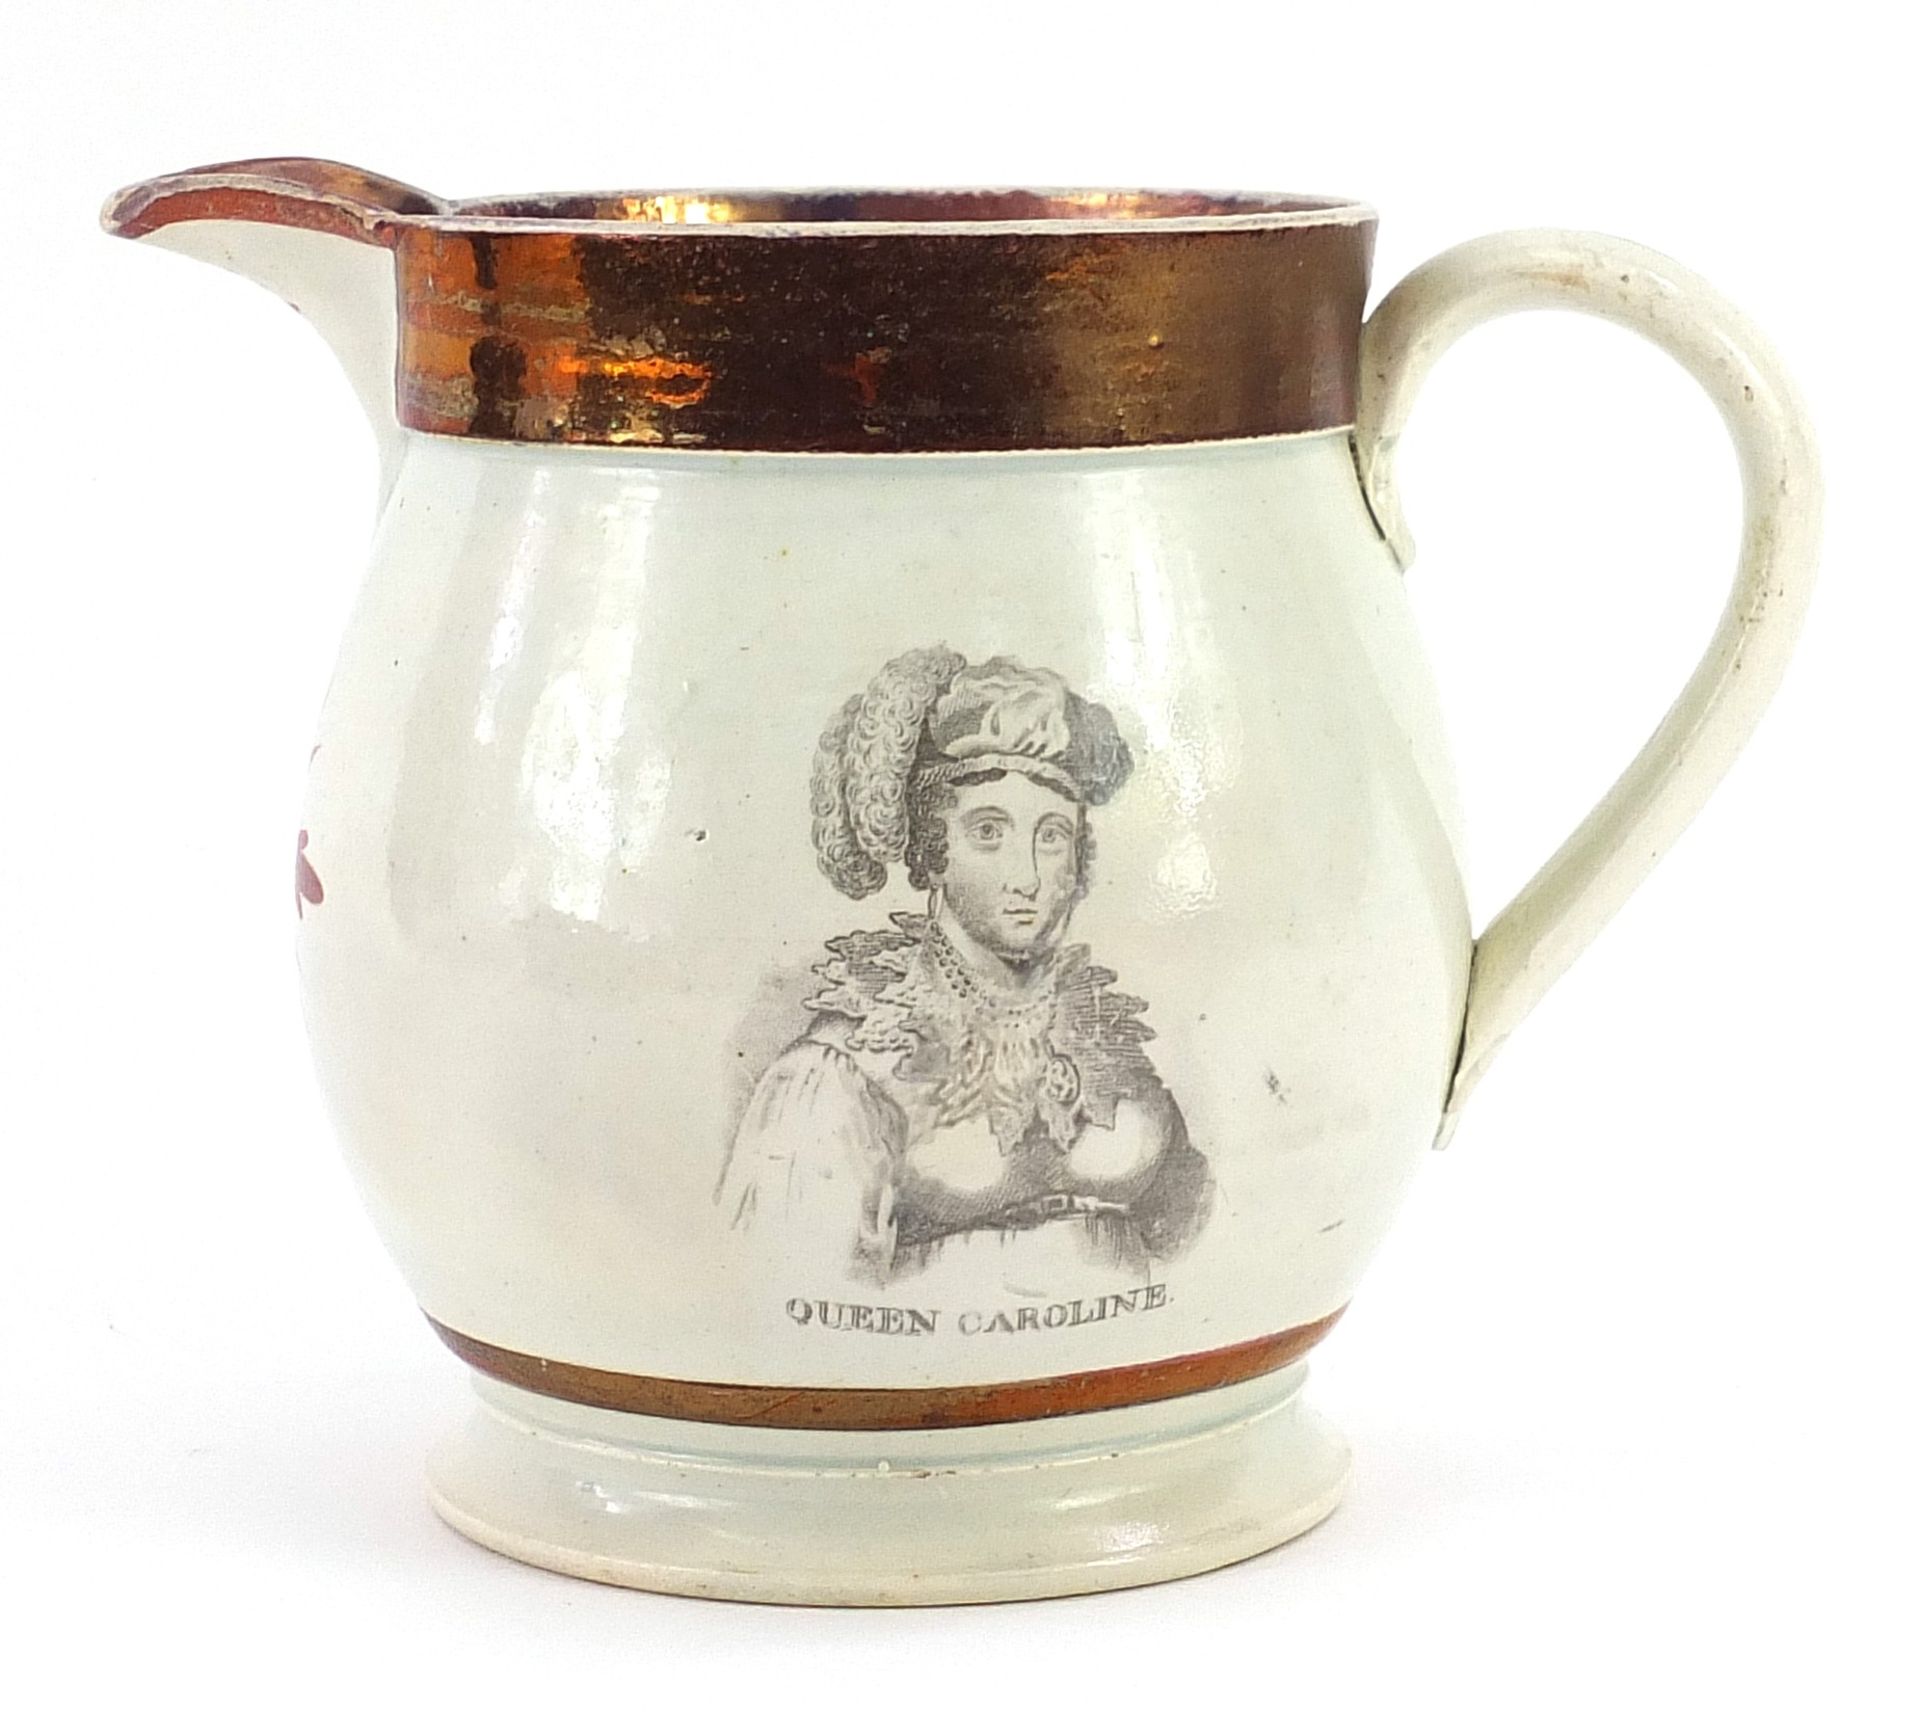 Victorian Sunderland lustre jug commemorating Queen Caroline, 12cm high